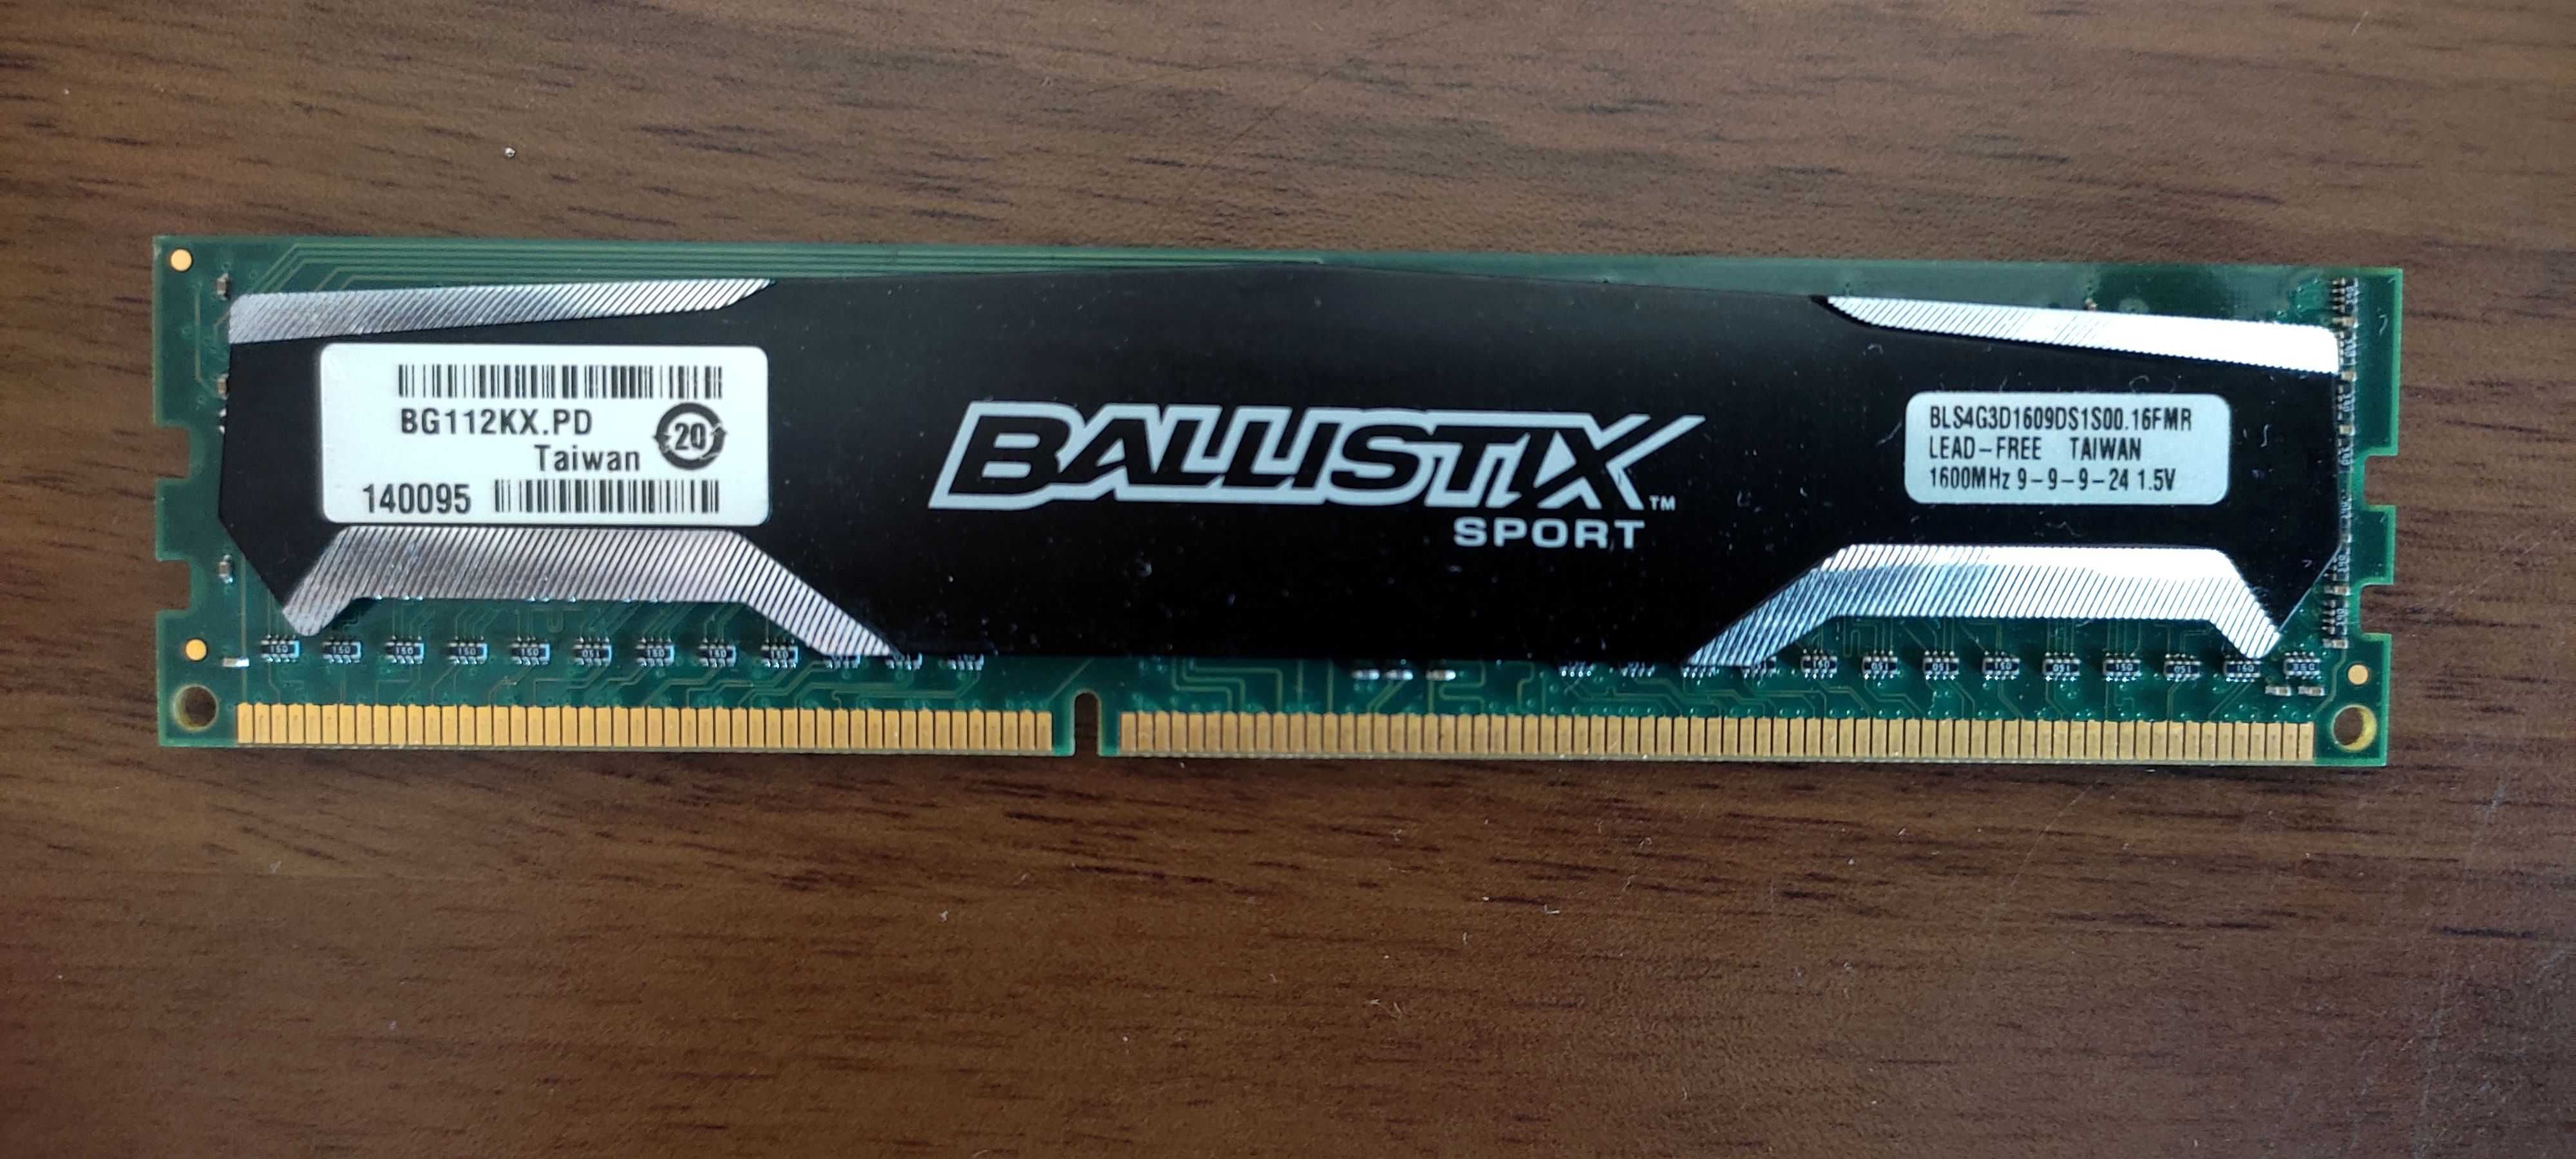 Ігрова оперативна пам'ять Crucial Ballistix Sport DDR3